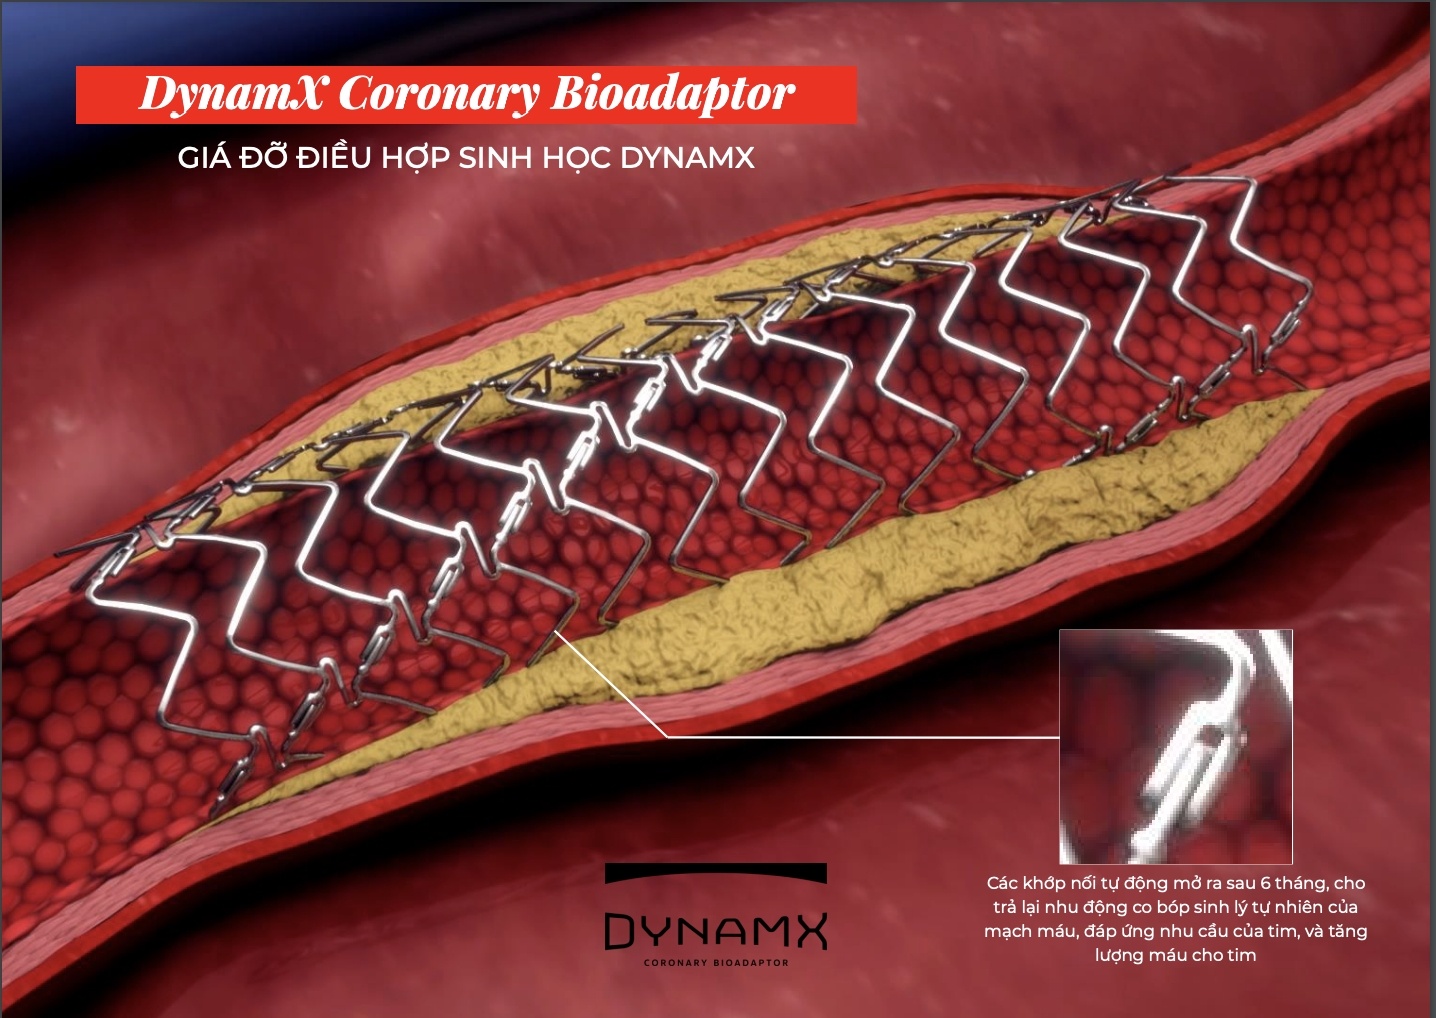 elixir medicals dynamx bioadaptor returns strong results